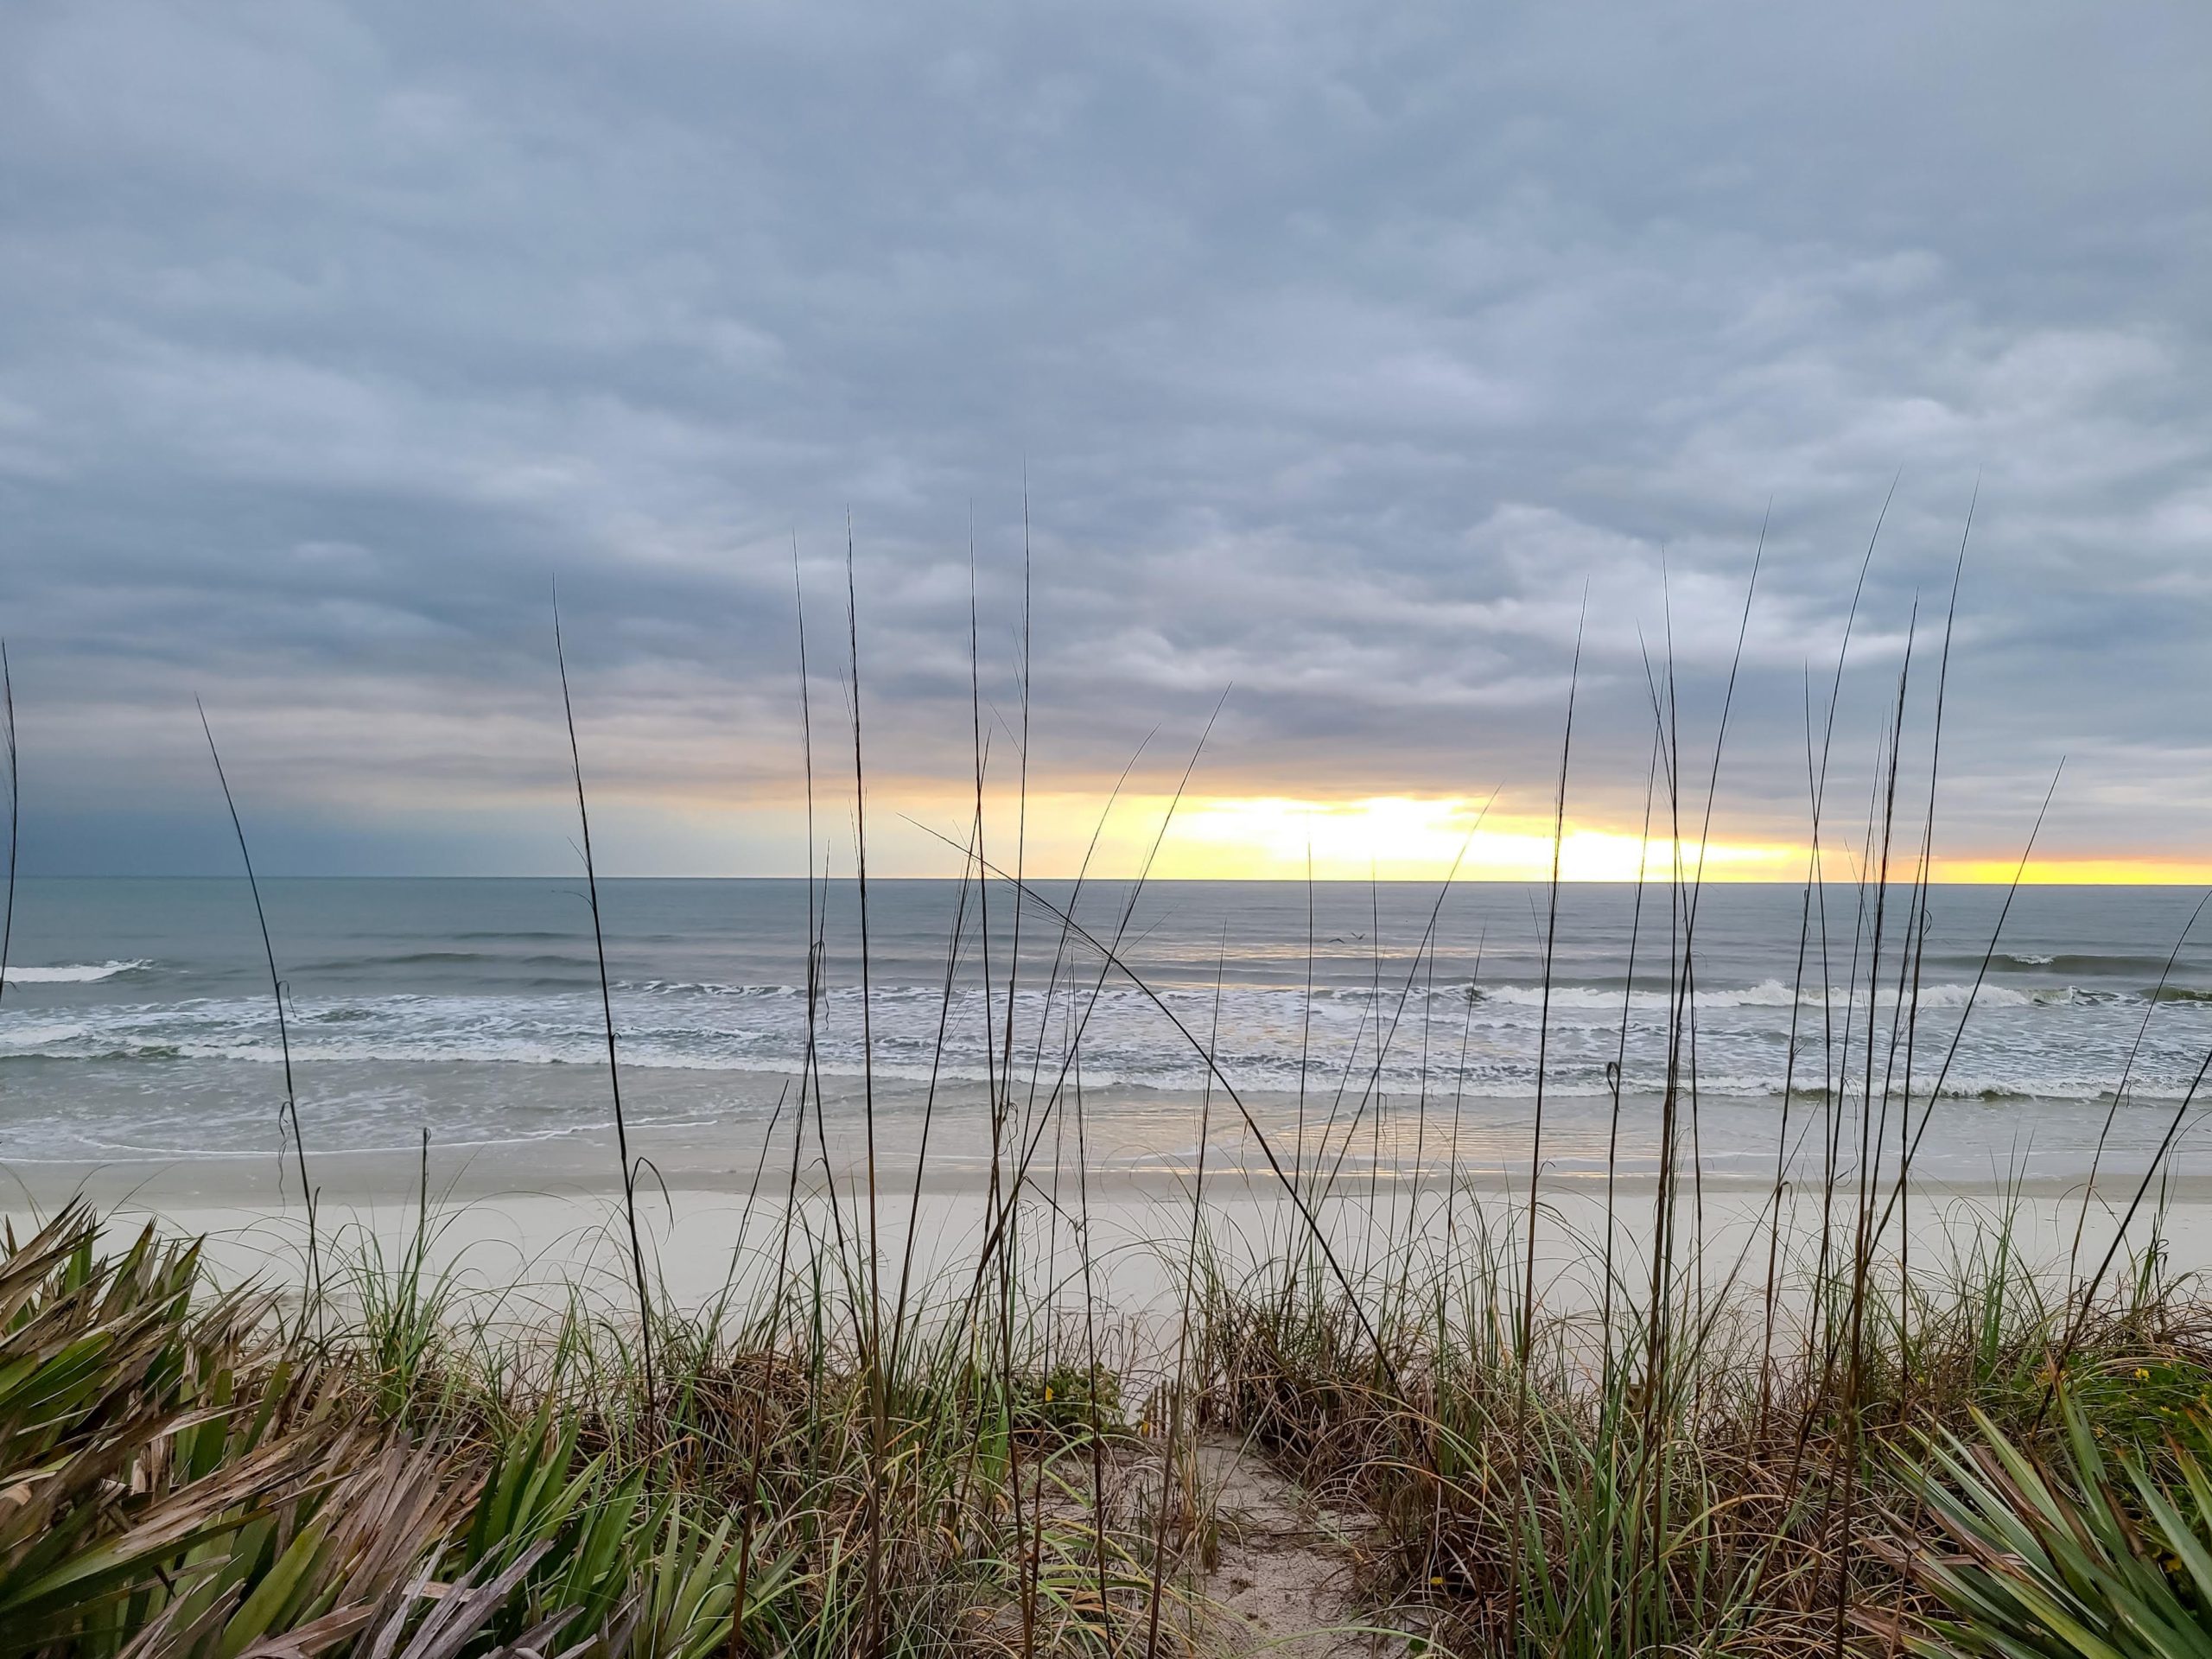 Fall Florida Trip, Day 1: Pen Shells at New Smyrna Beach! 